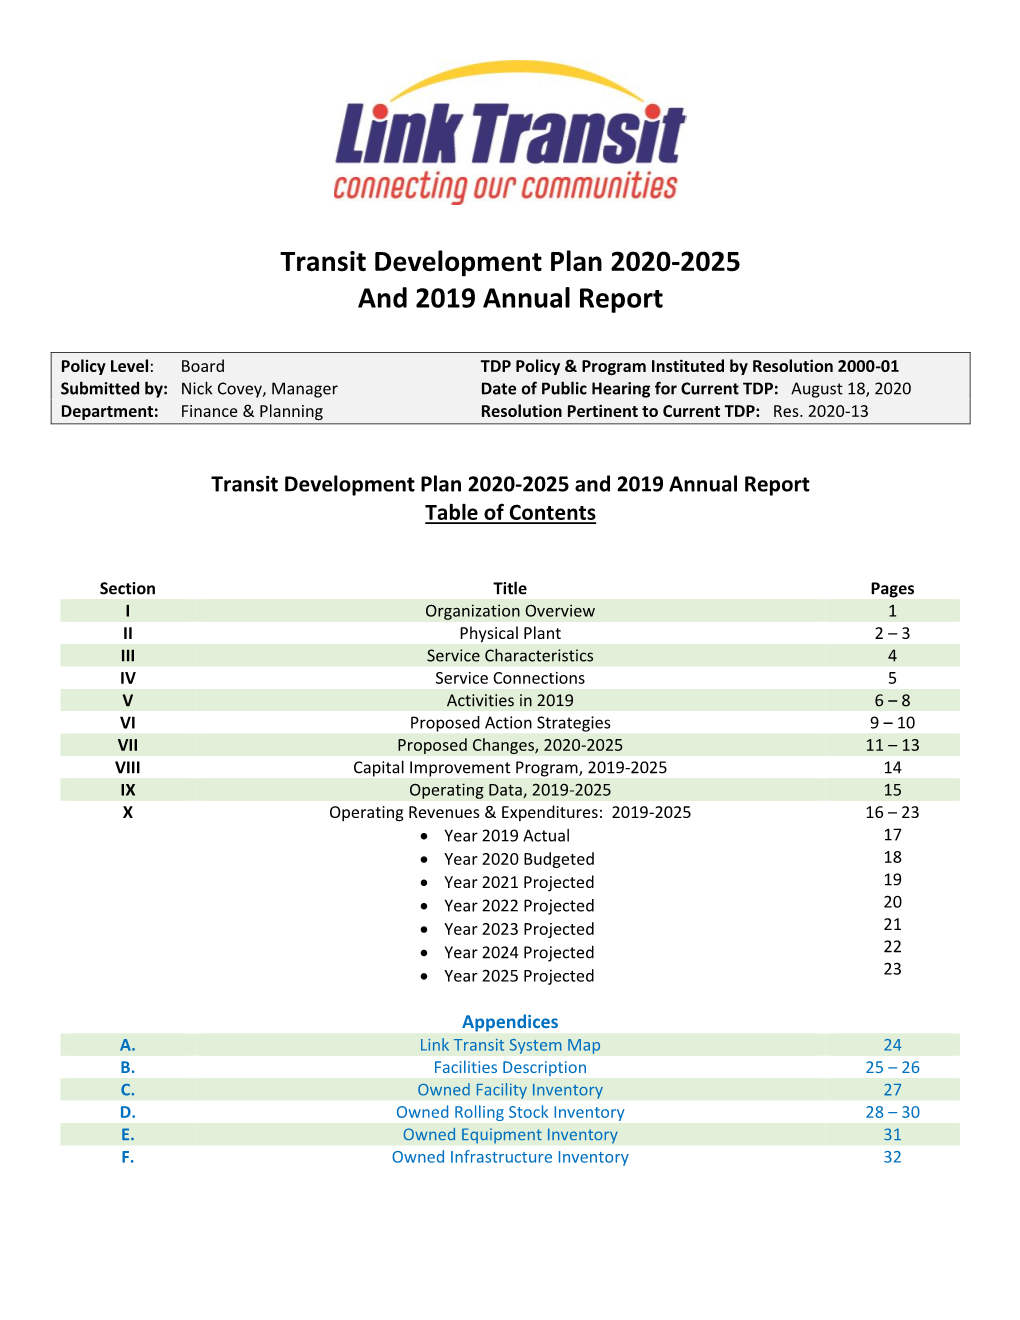 Transit Development Plan 2020-2025 and 2019 Annual Report